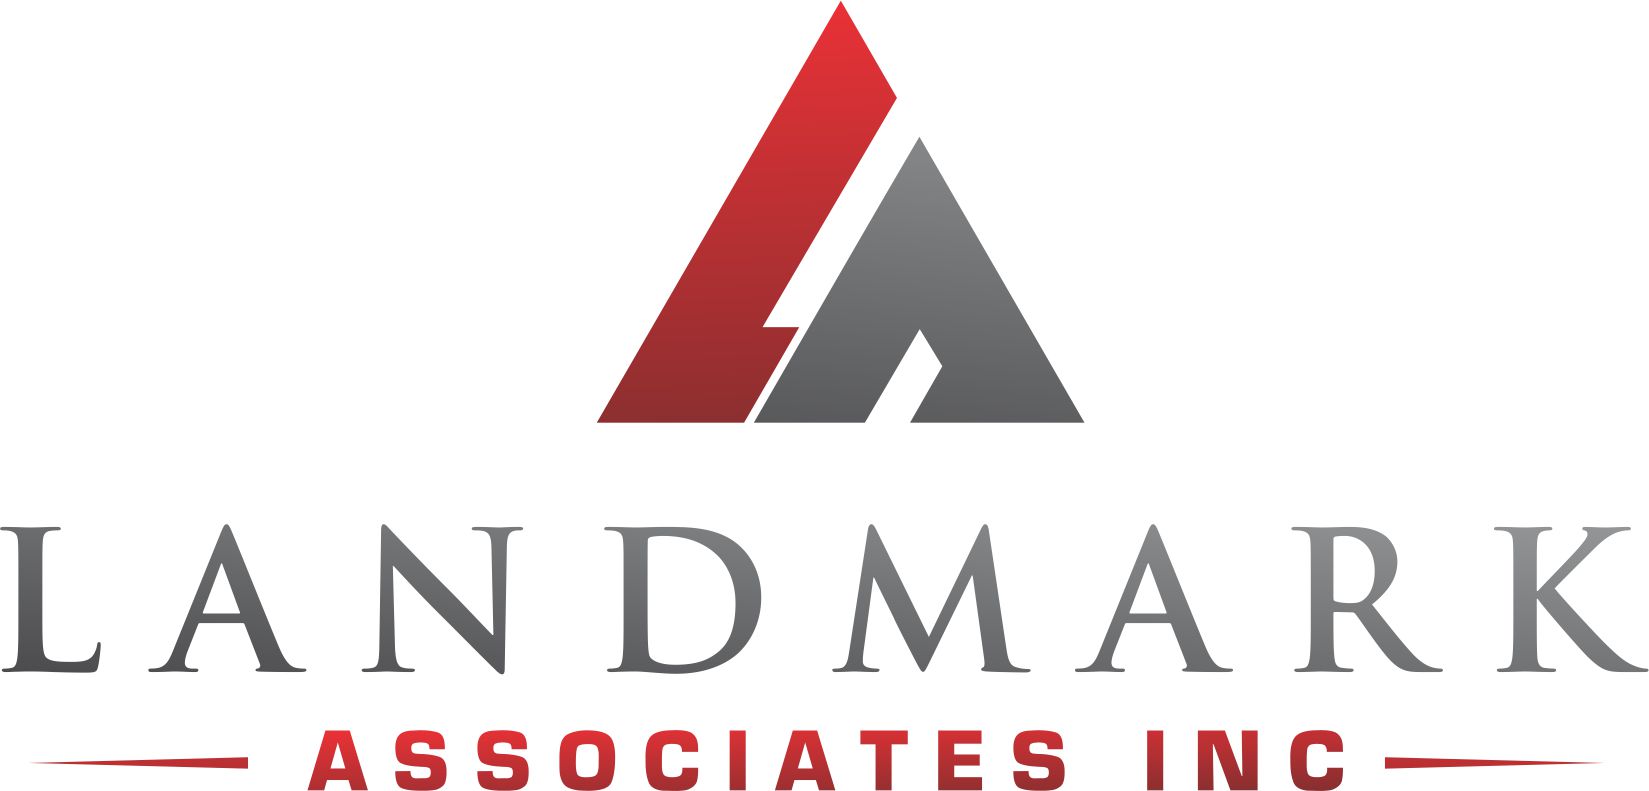 Landmark Associates